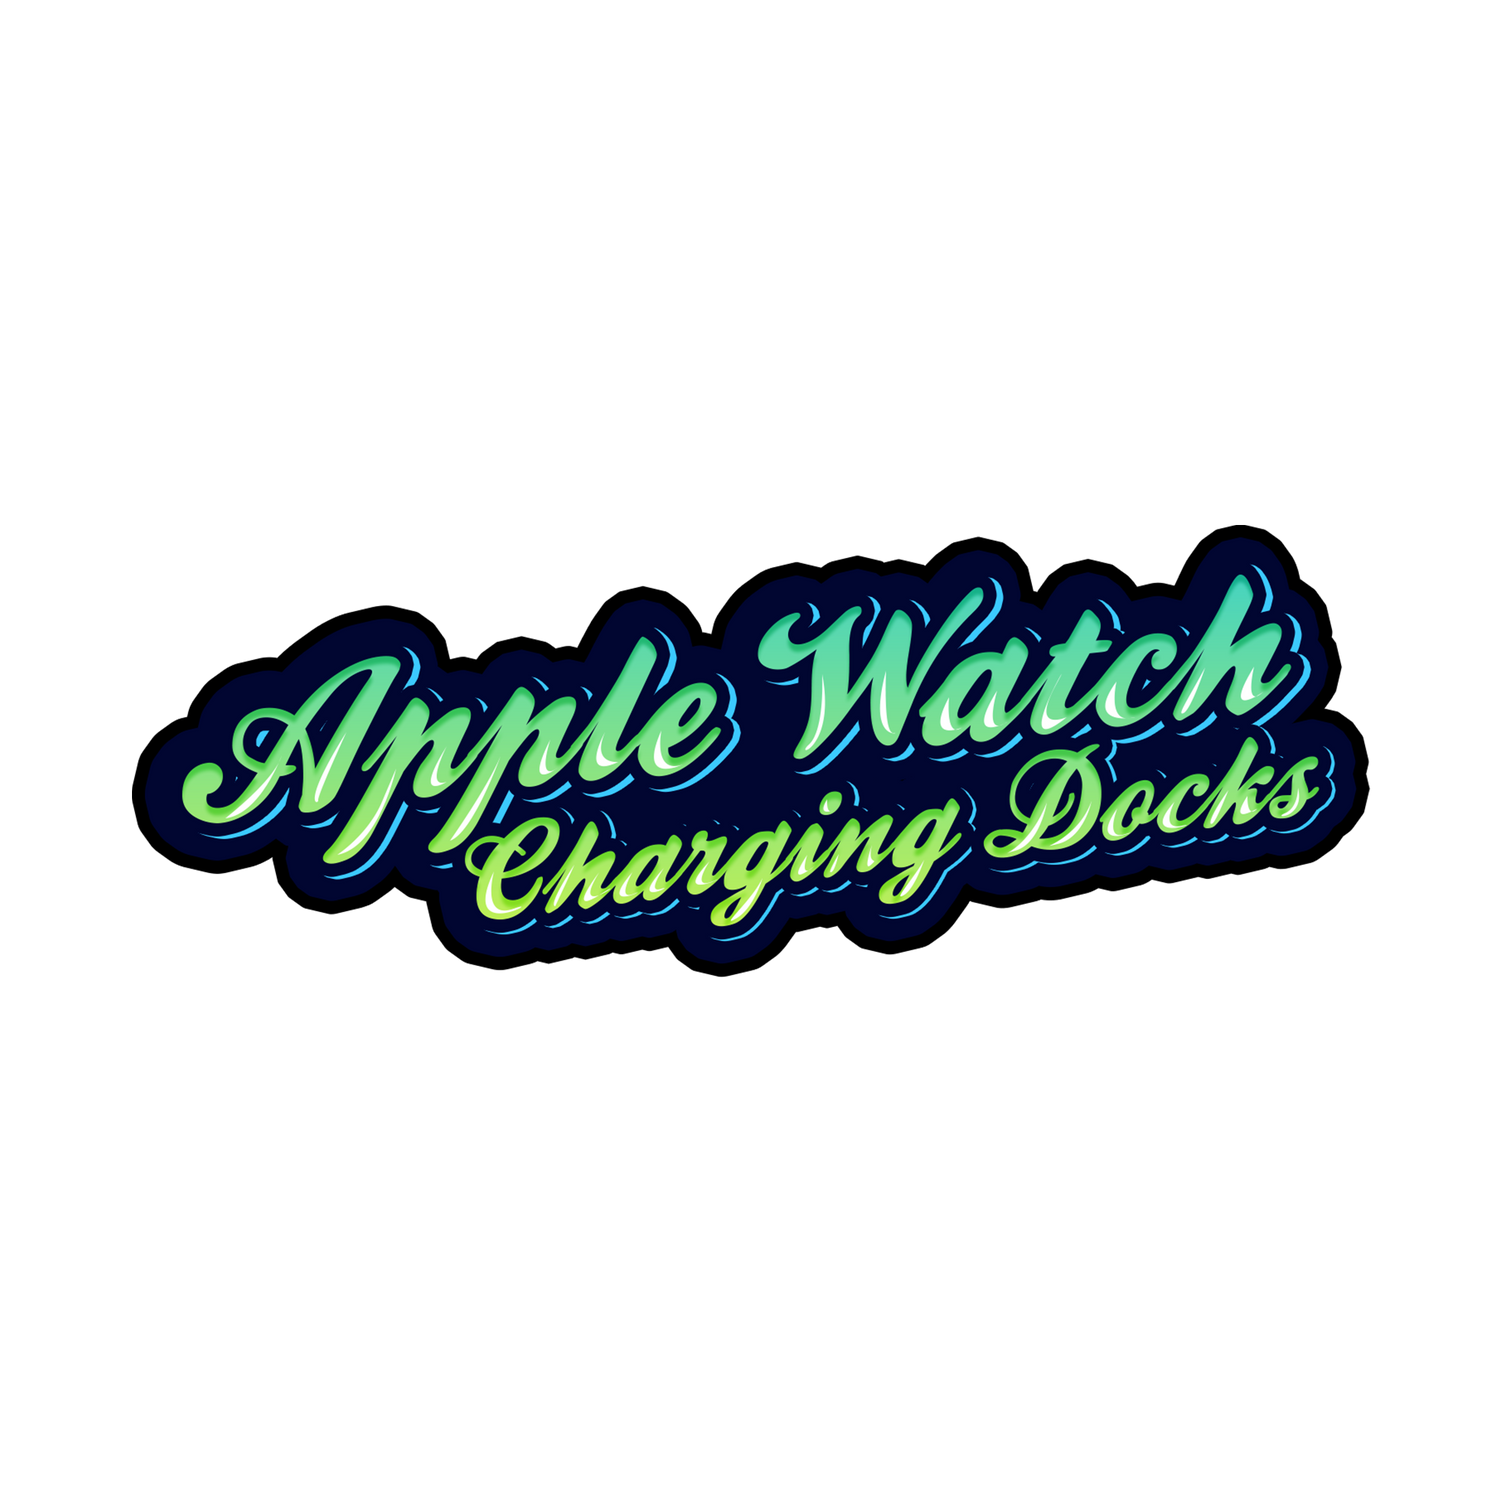 Apple Watch Charging Docks